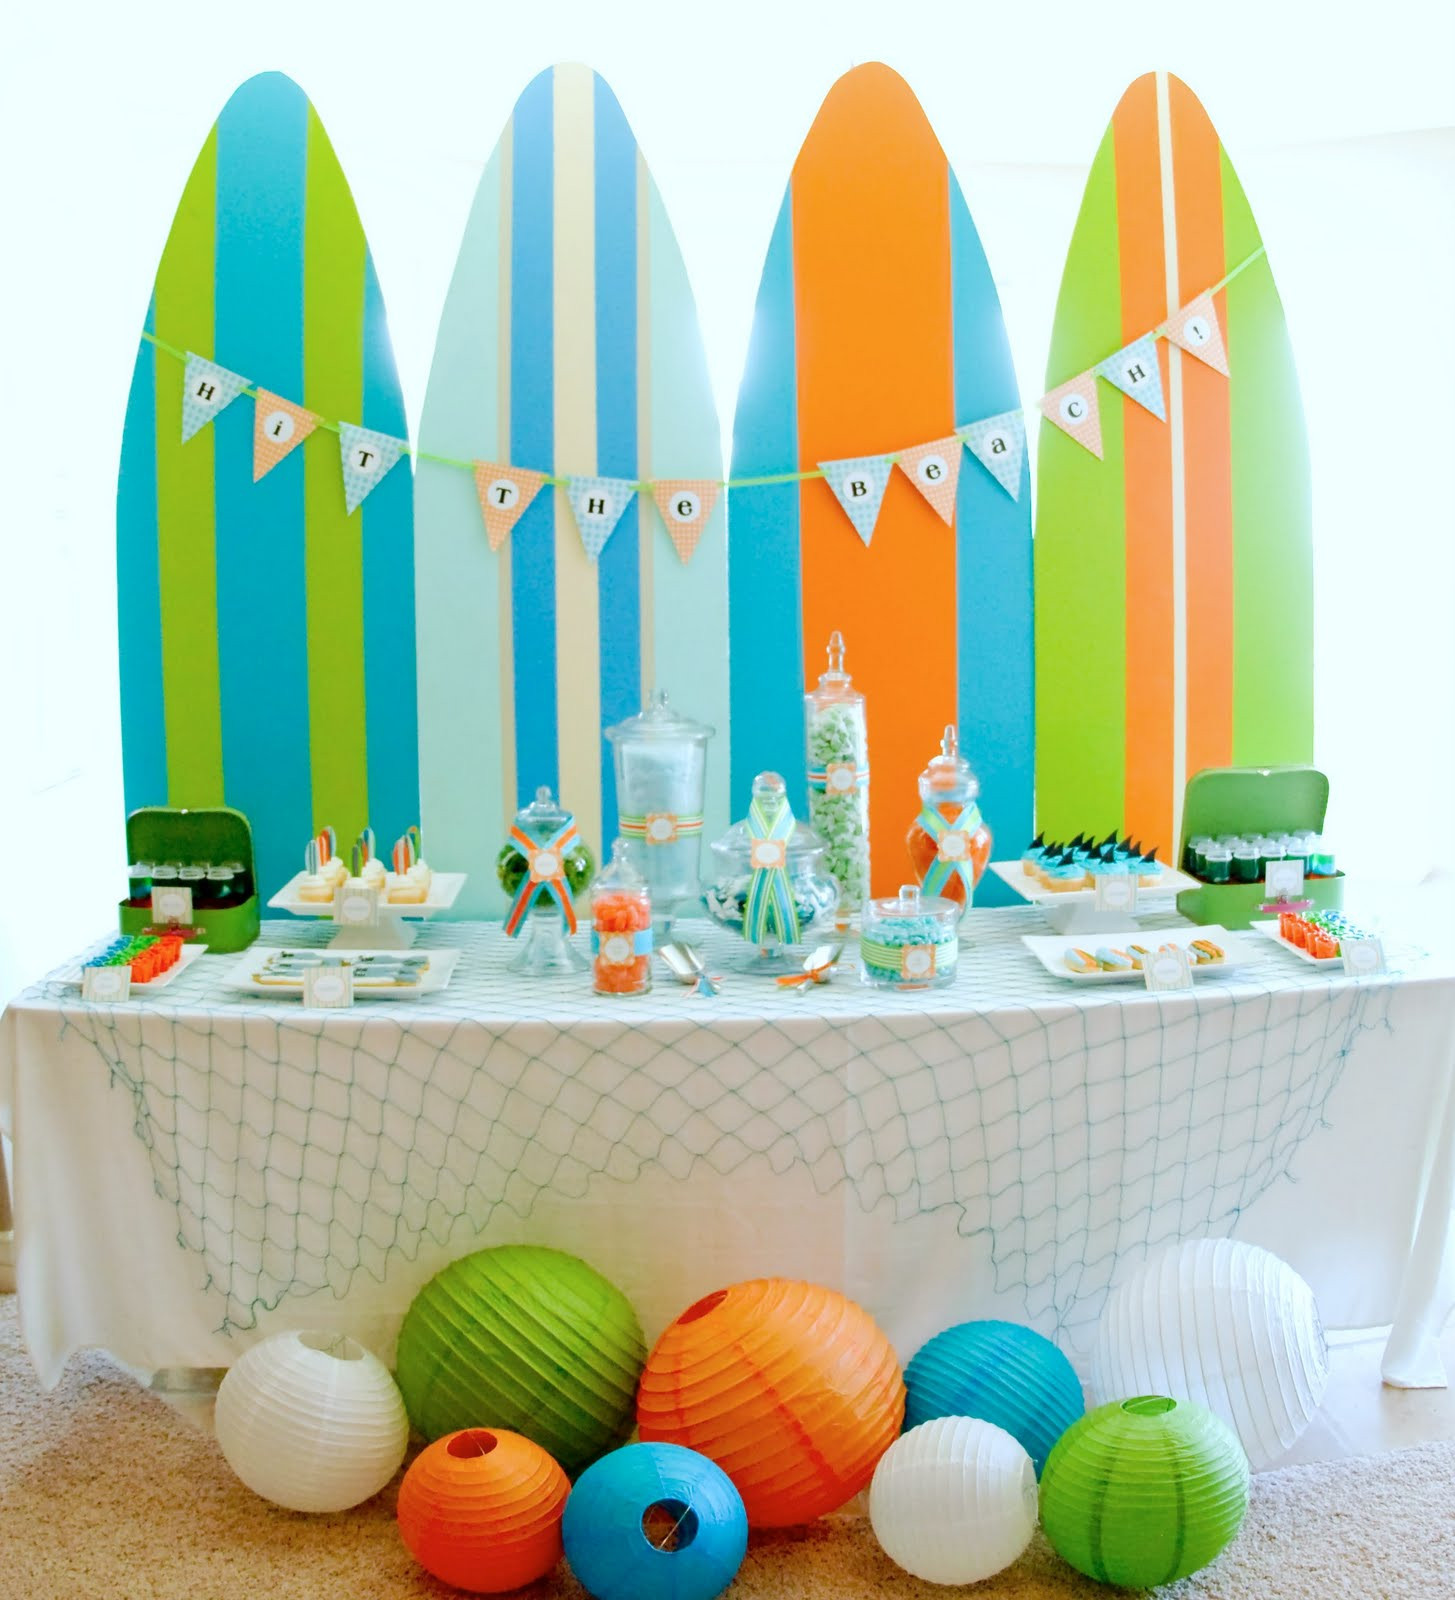 Boy Beach Birthday Party Ideas
 Kara s Party Ideas Surf s Up Summer Pool Party